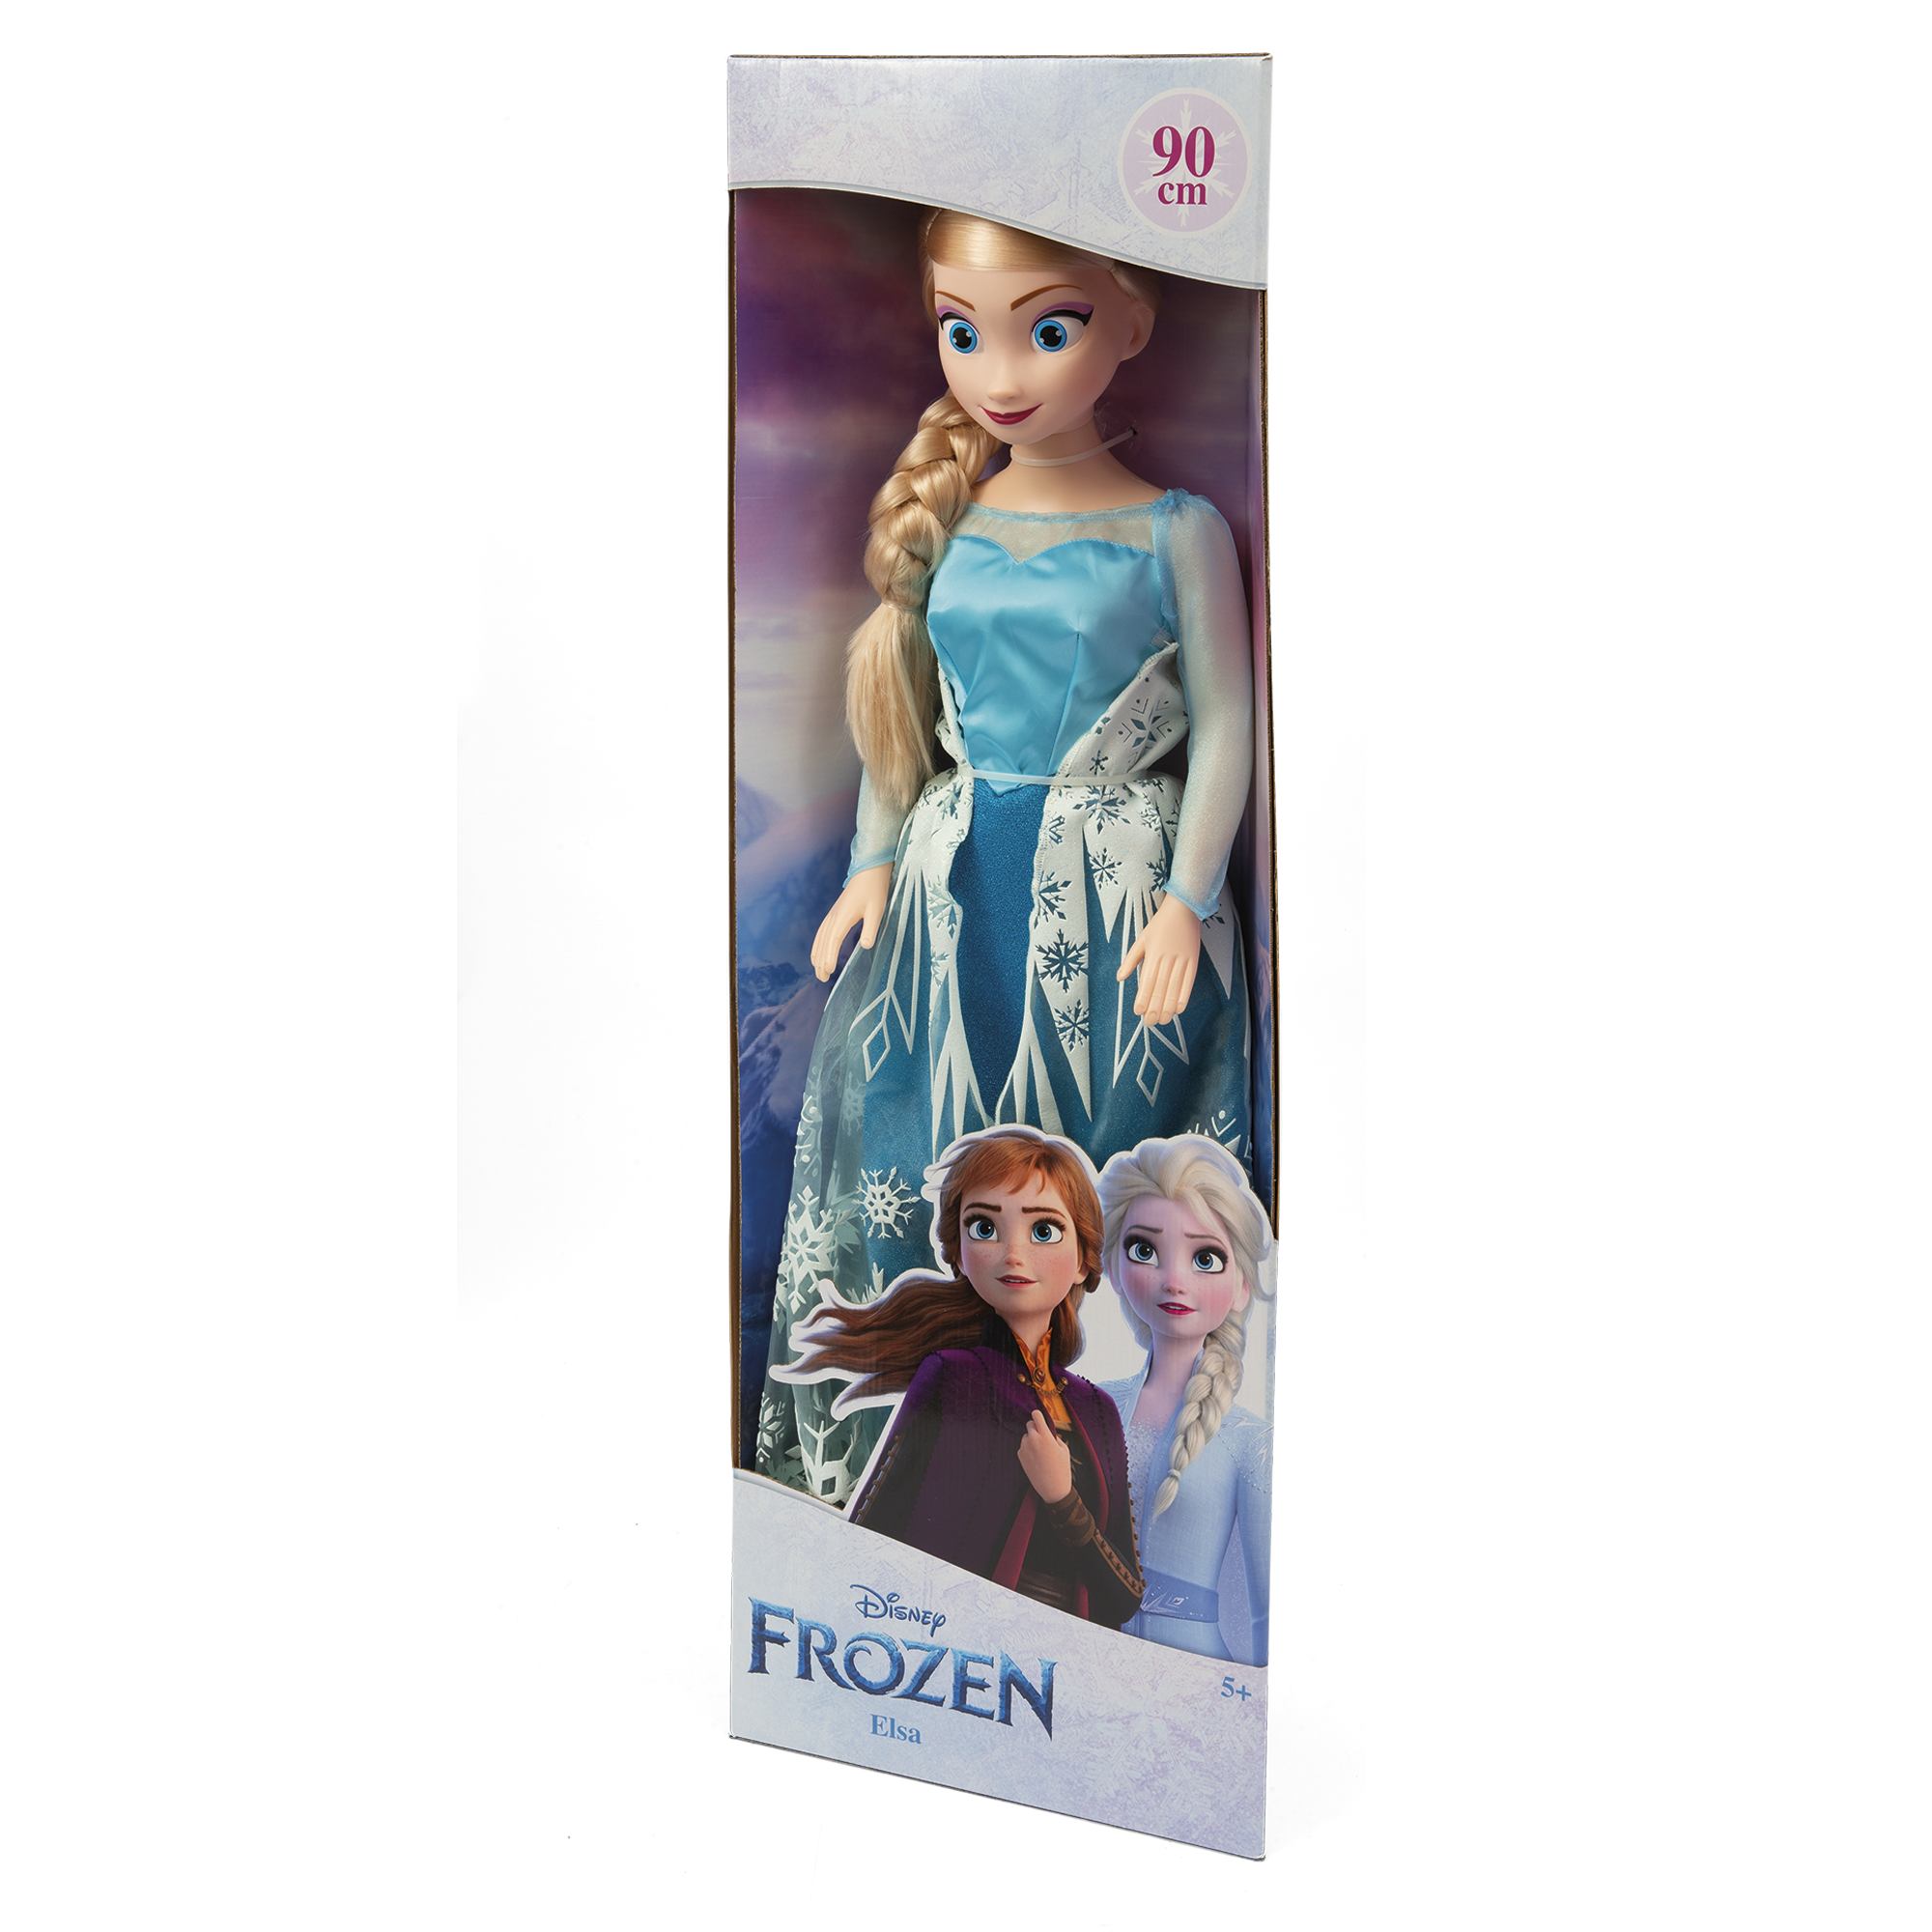 Disney frozen elsa 90cm - DISNEY PRINCESS, Frozen